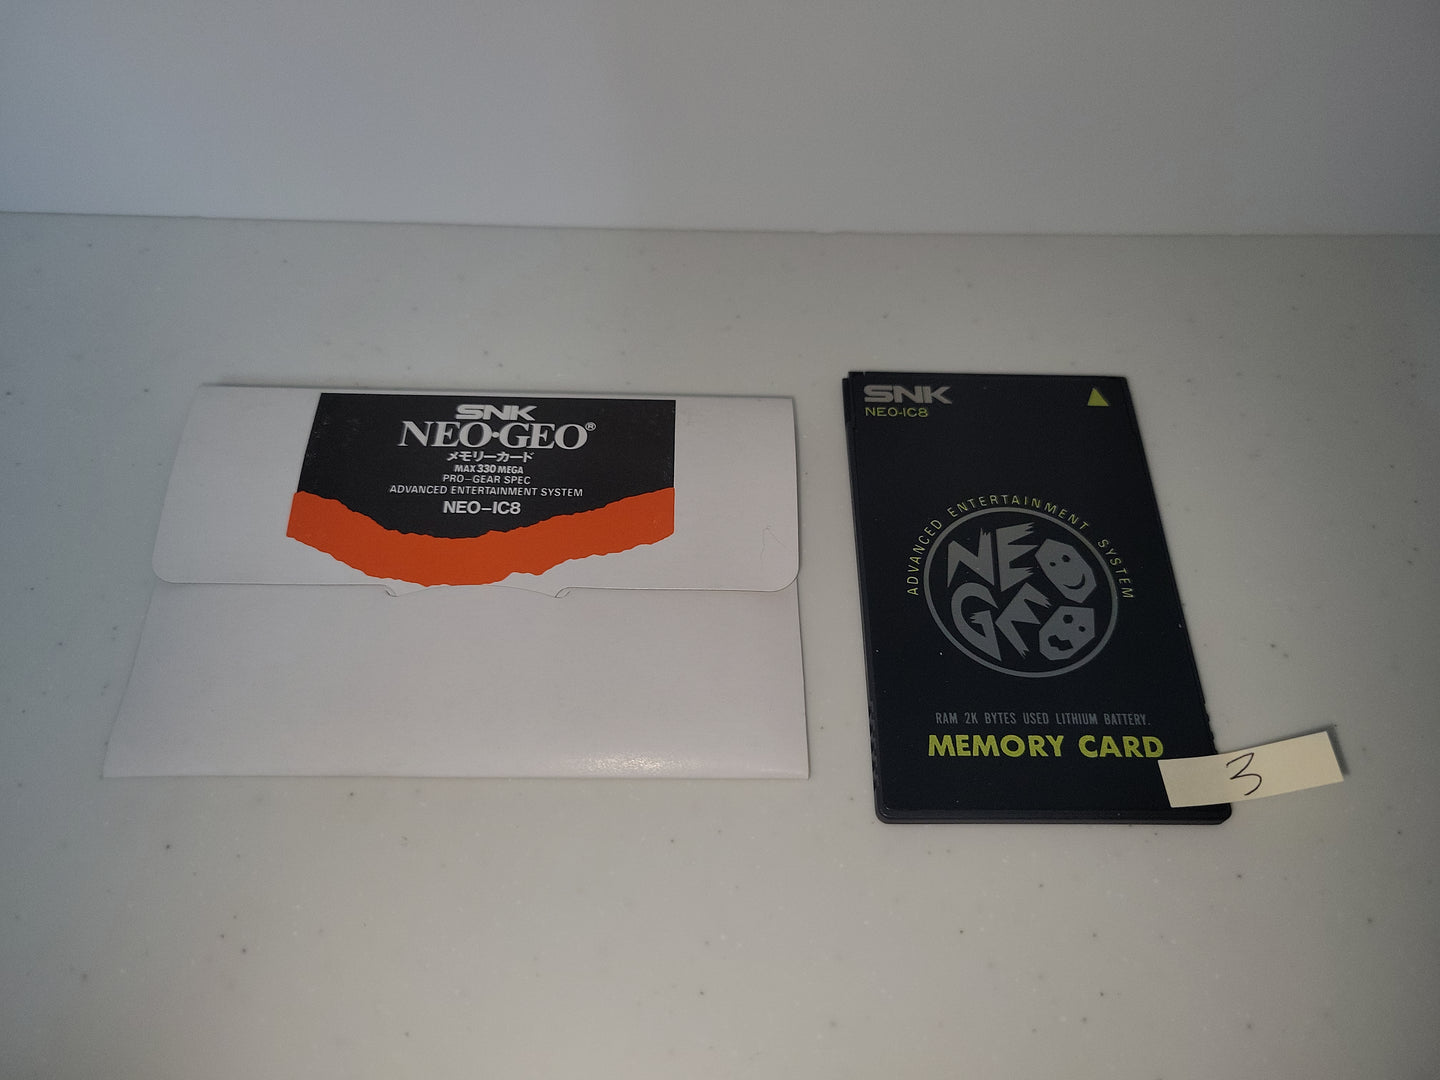 Snk Neo Geo Memory Card - Snk Neogeo AES NG